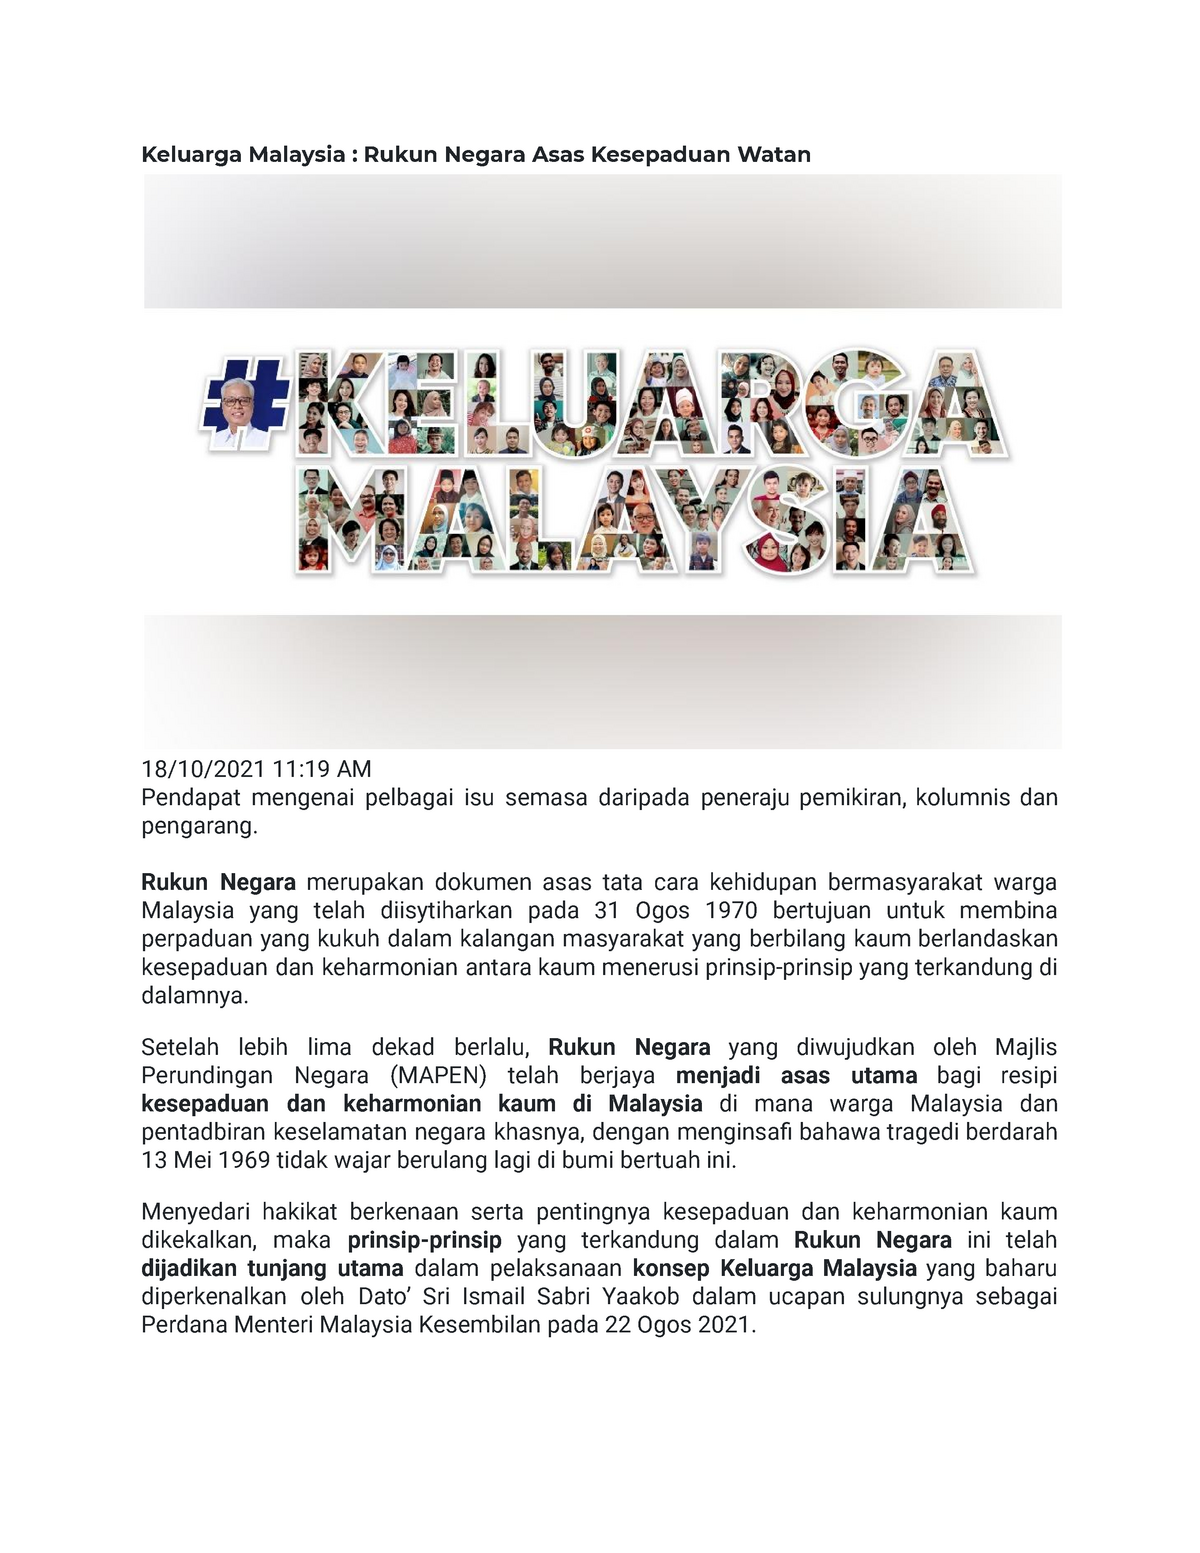 Rukun negara malaysia